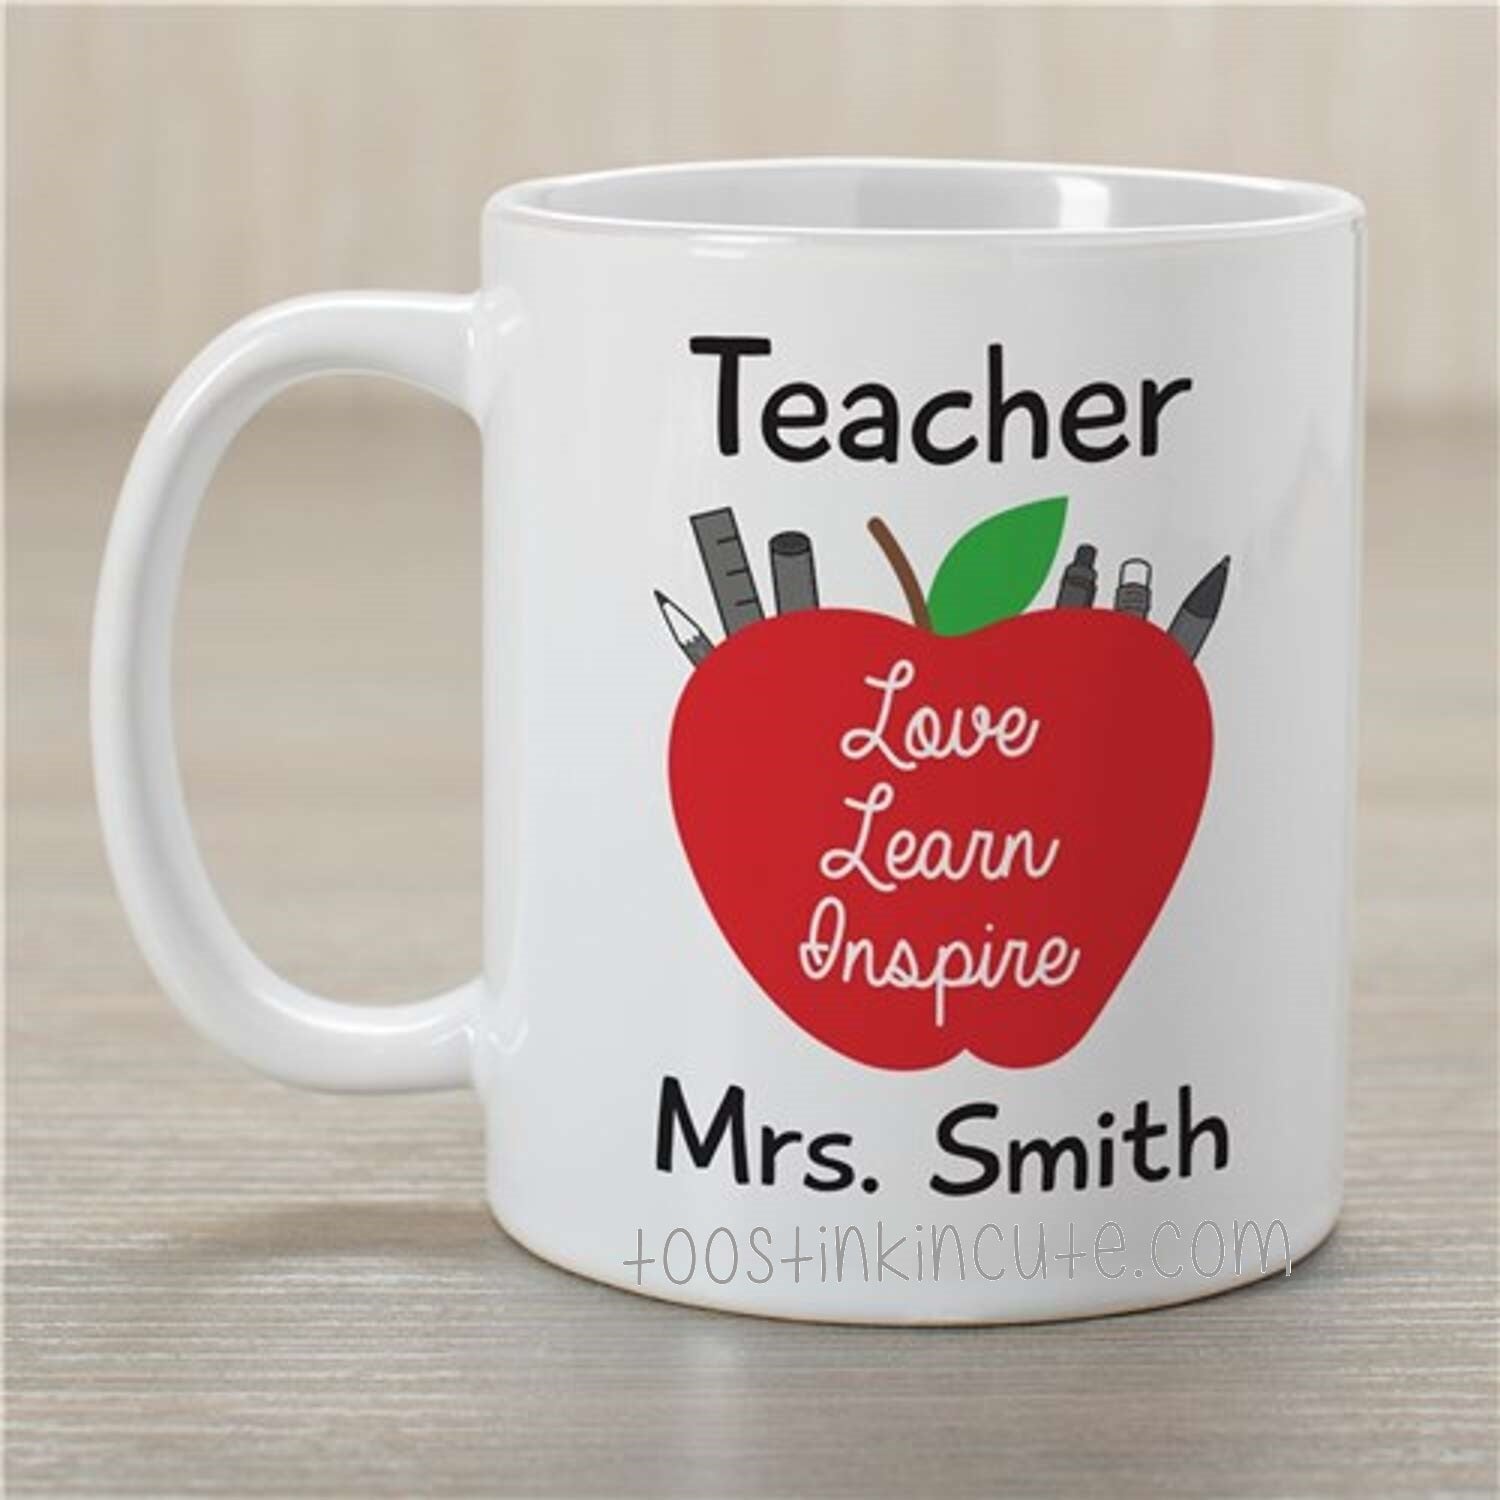 Teacher Love, Learn, Inspire Personalized Coffee Mug